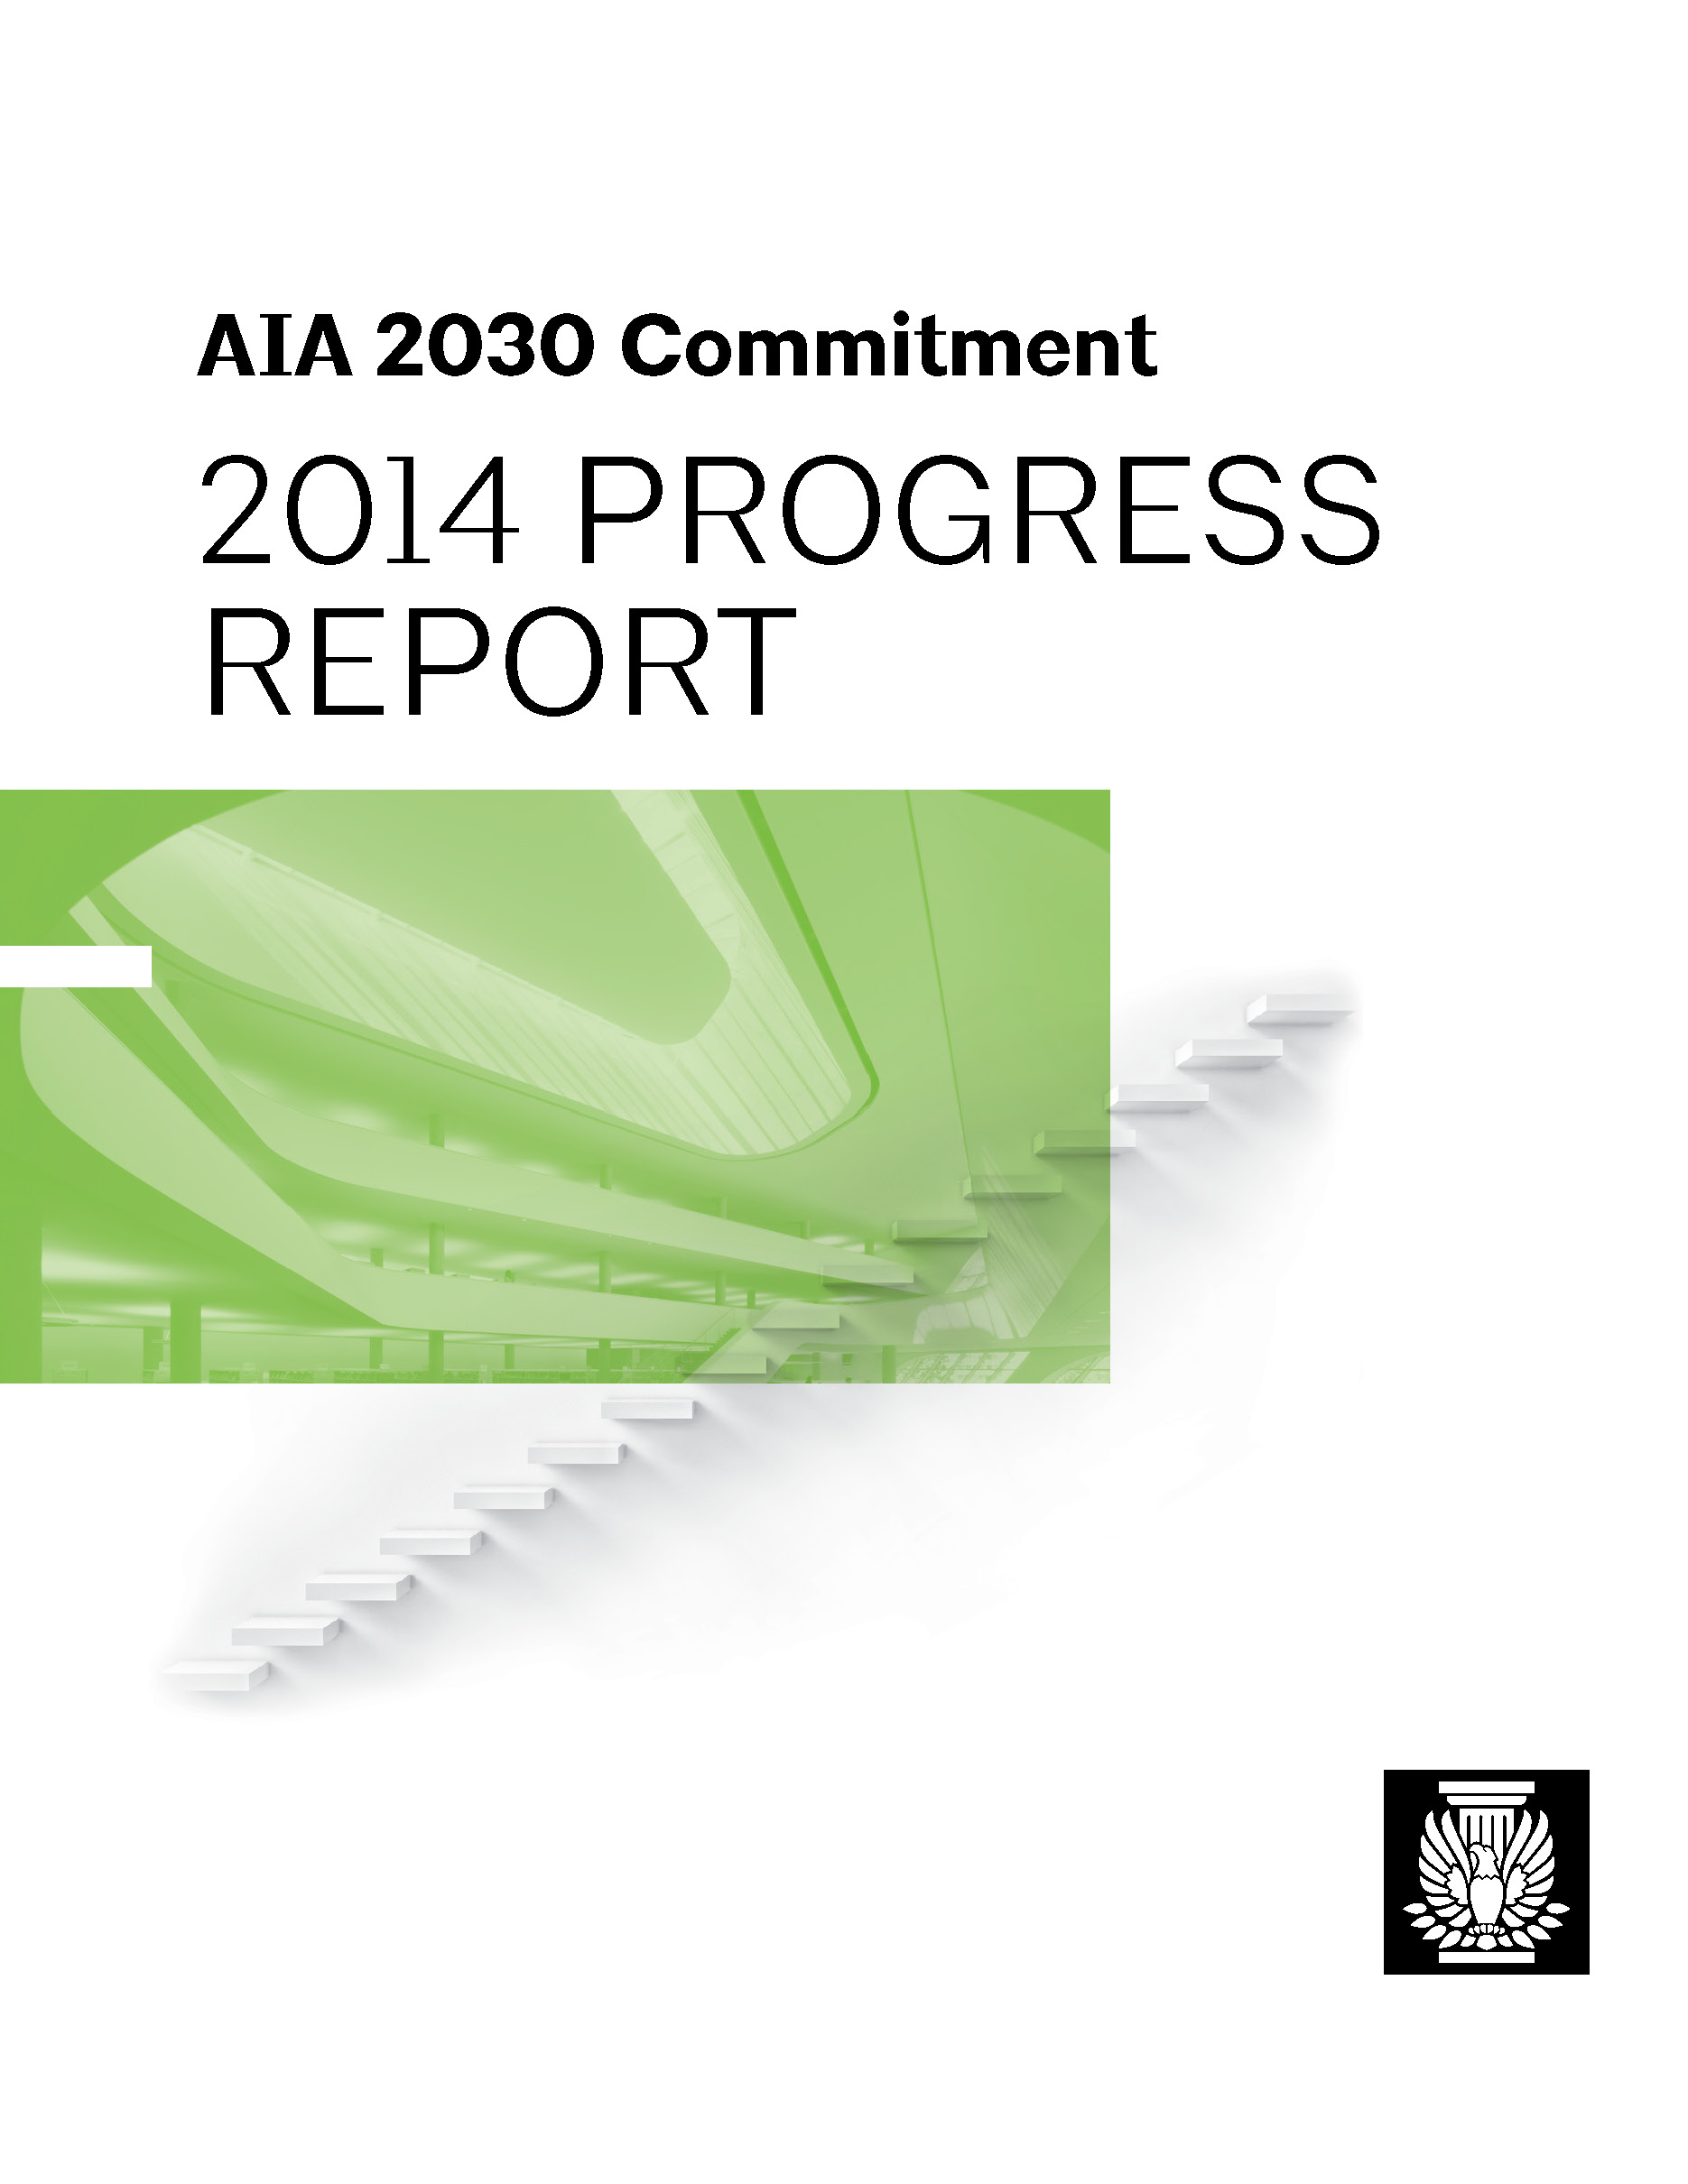 AIA 2030 Commitment – Progress Report 2014